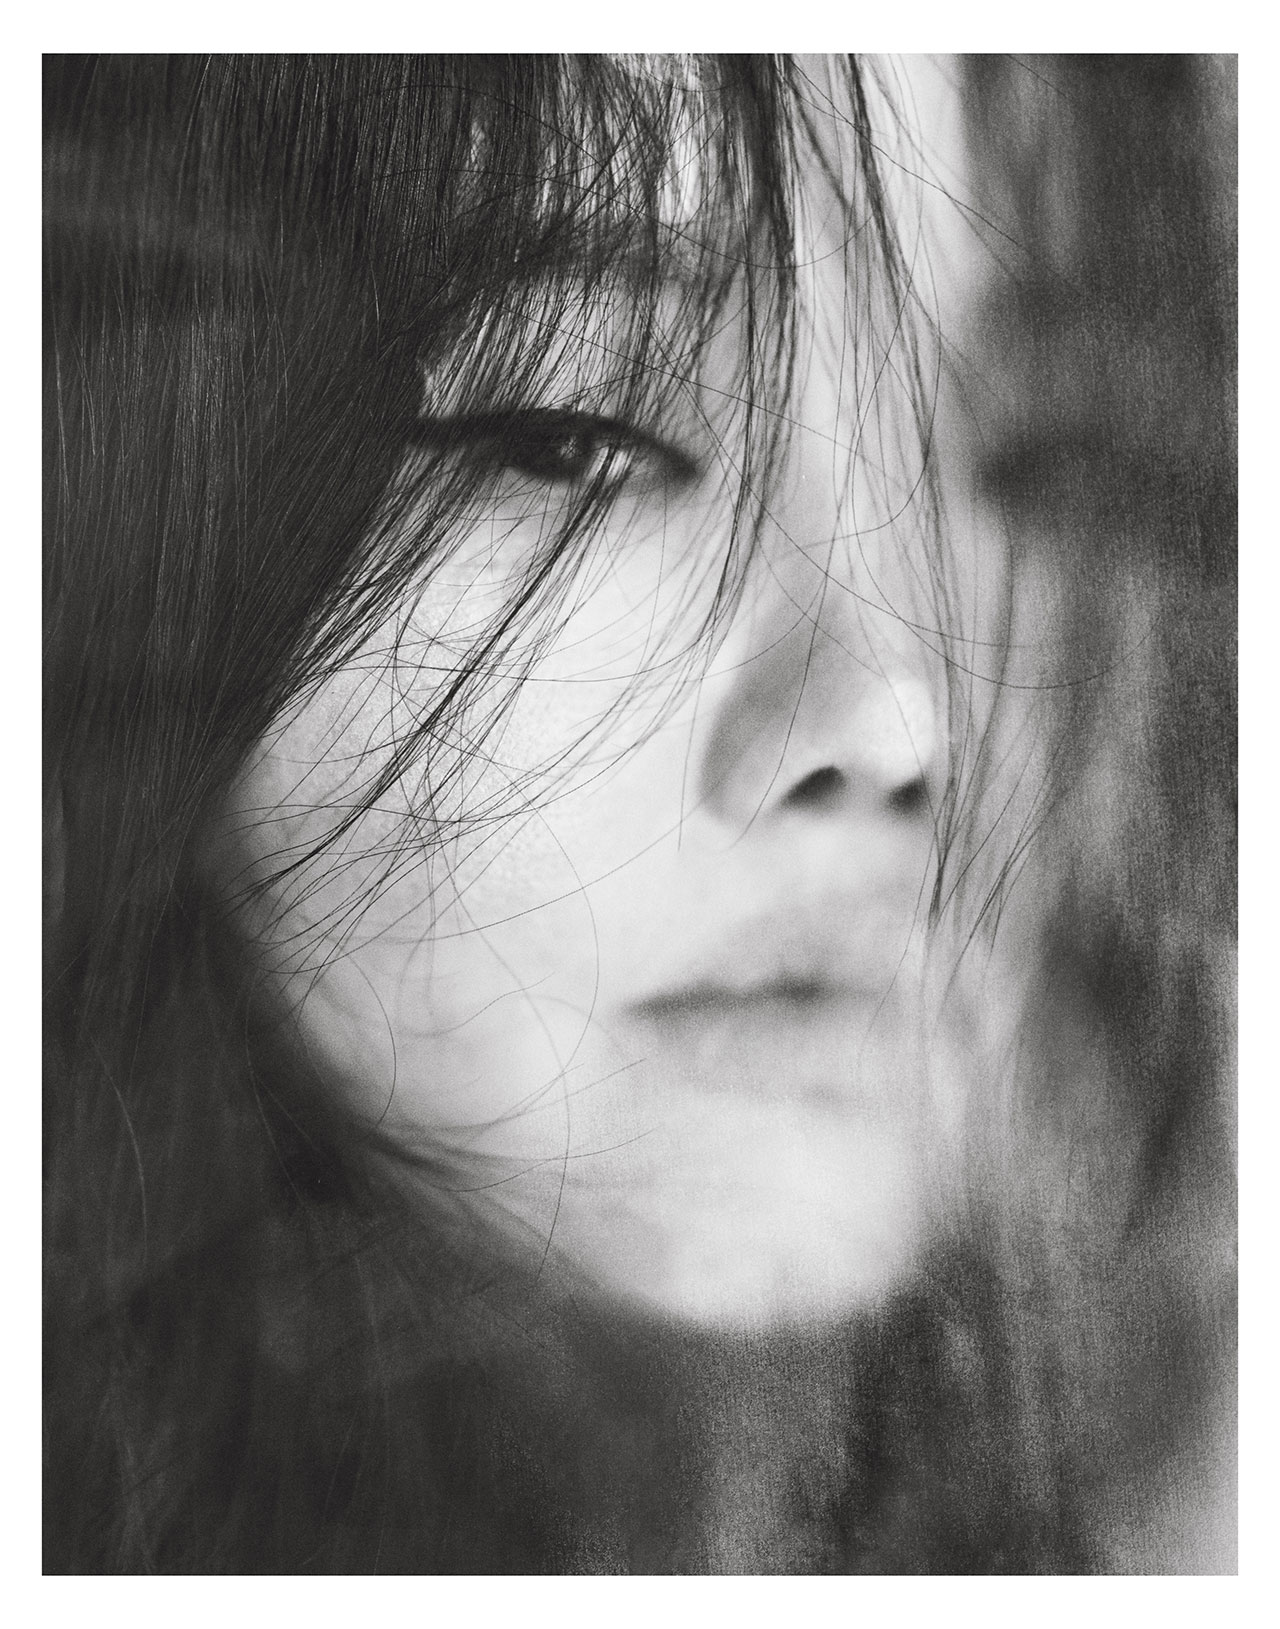 Gee Eun by Hong Jang Hyun for Models.com